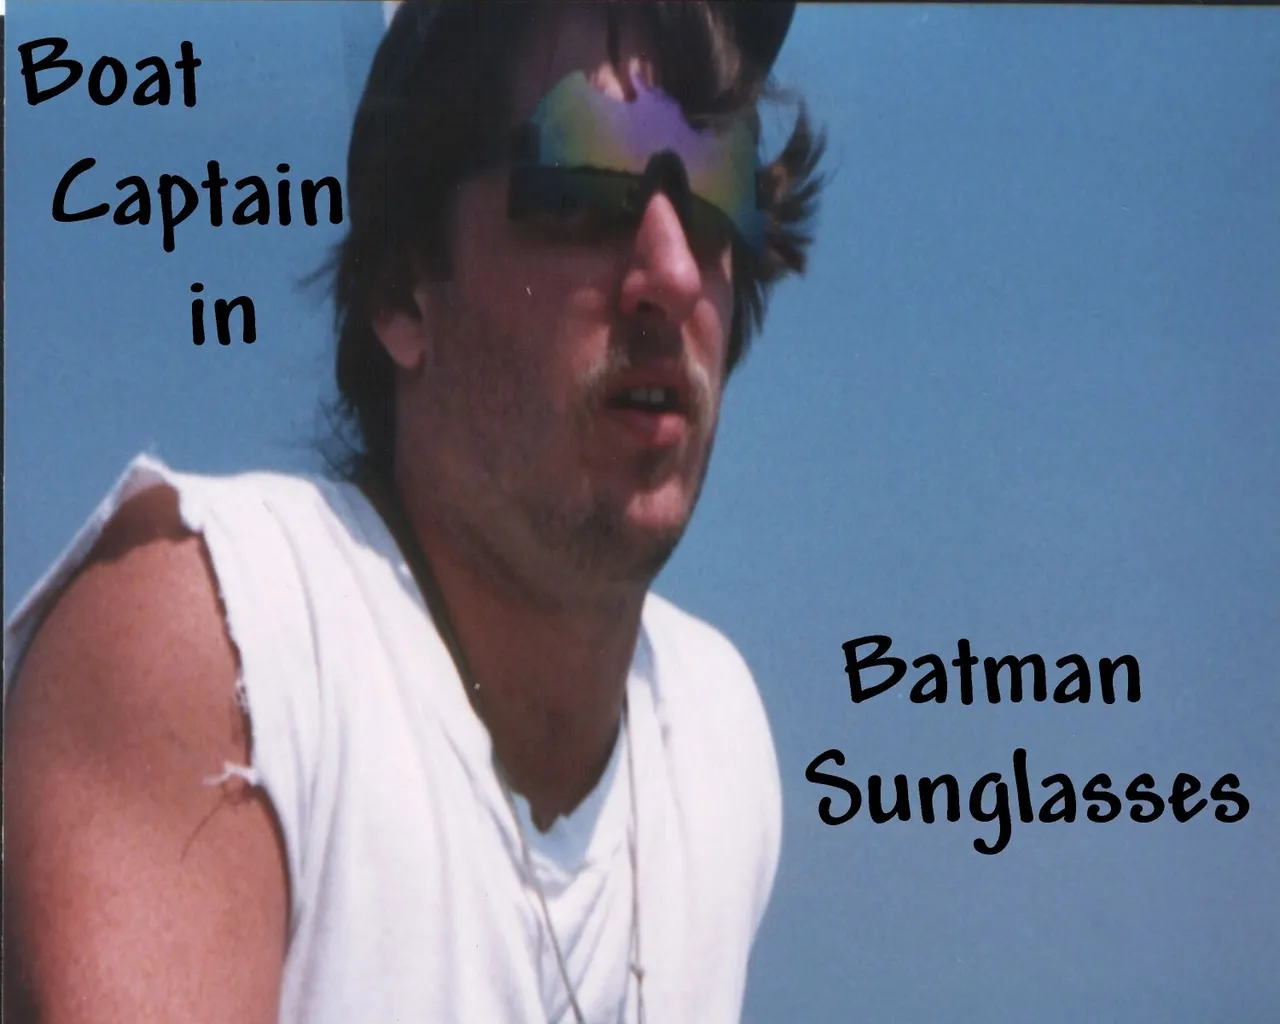 Boat Captain in Batman Sunglasses 1995.jpg